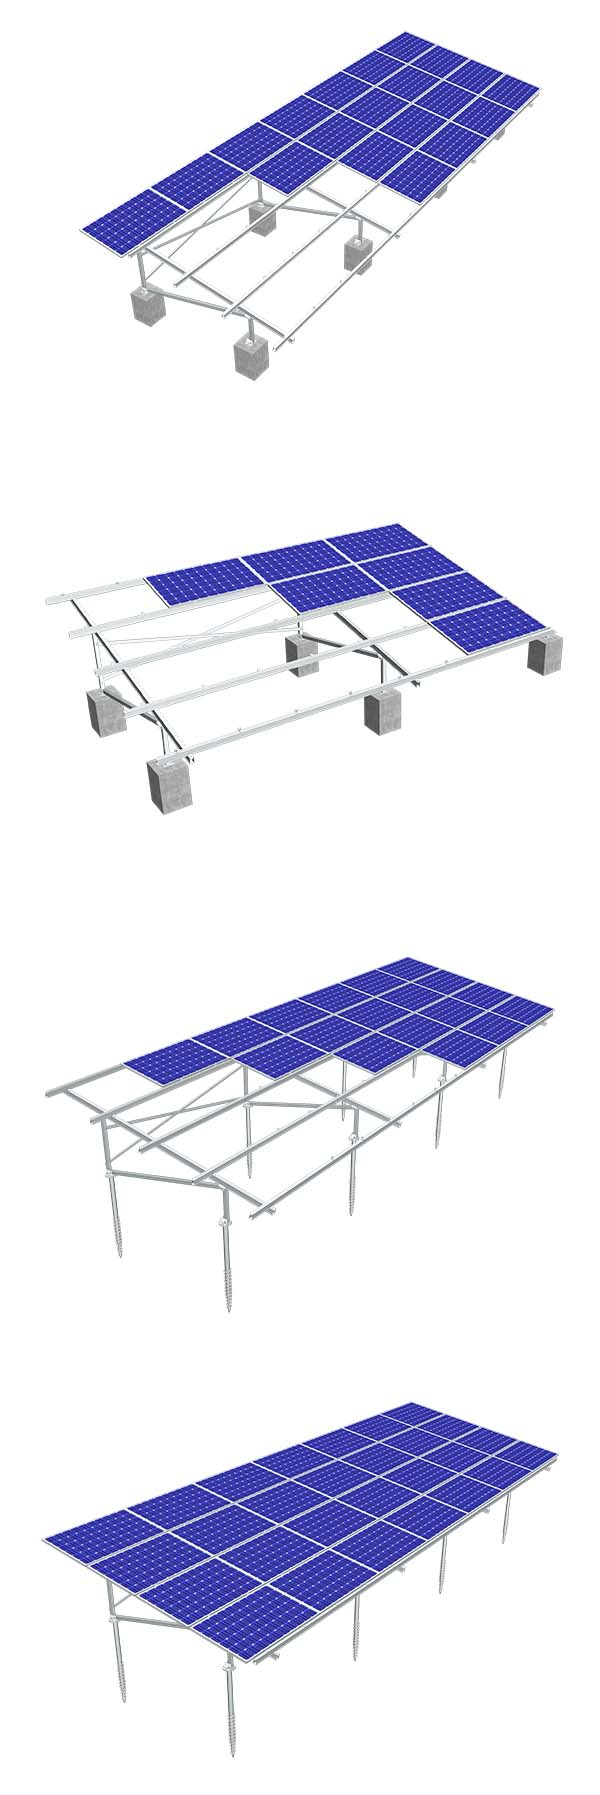 solar panel pole mount design